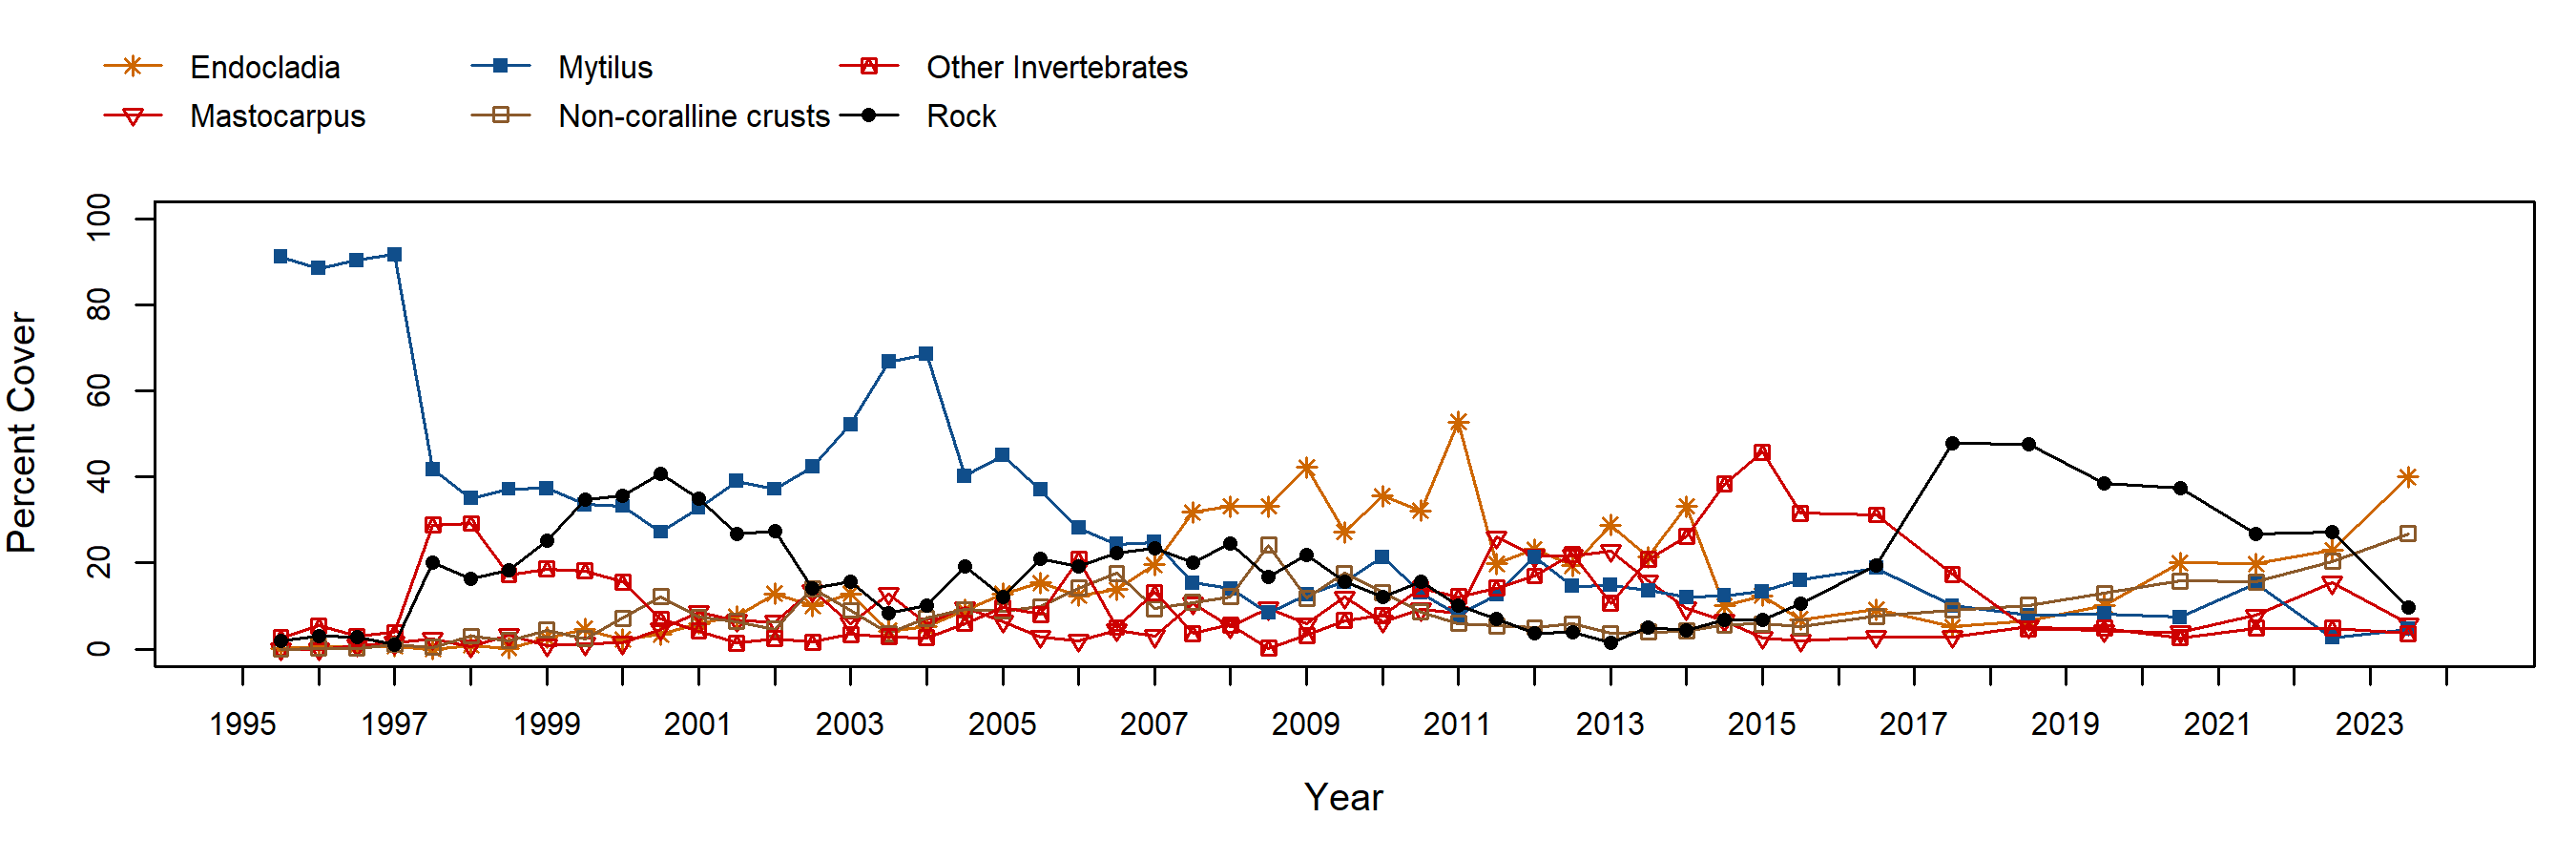 Shell Beach Mytilus trend plot